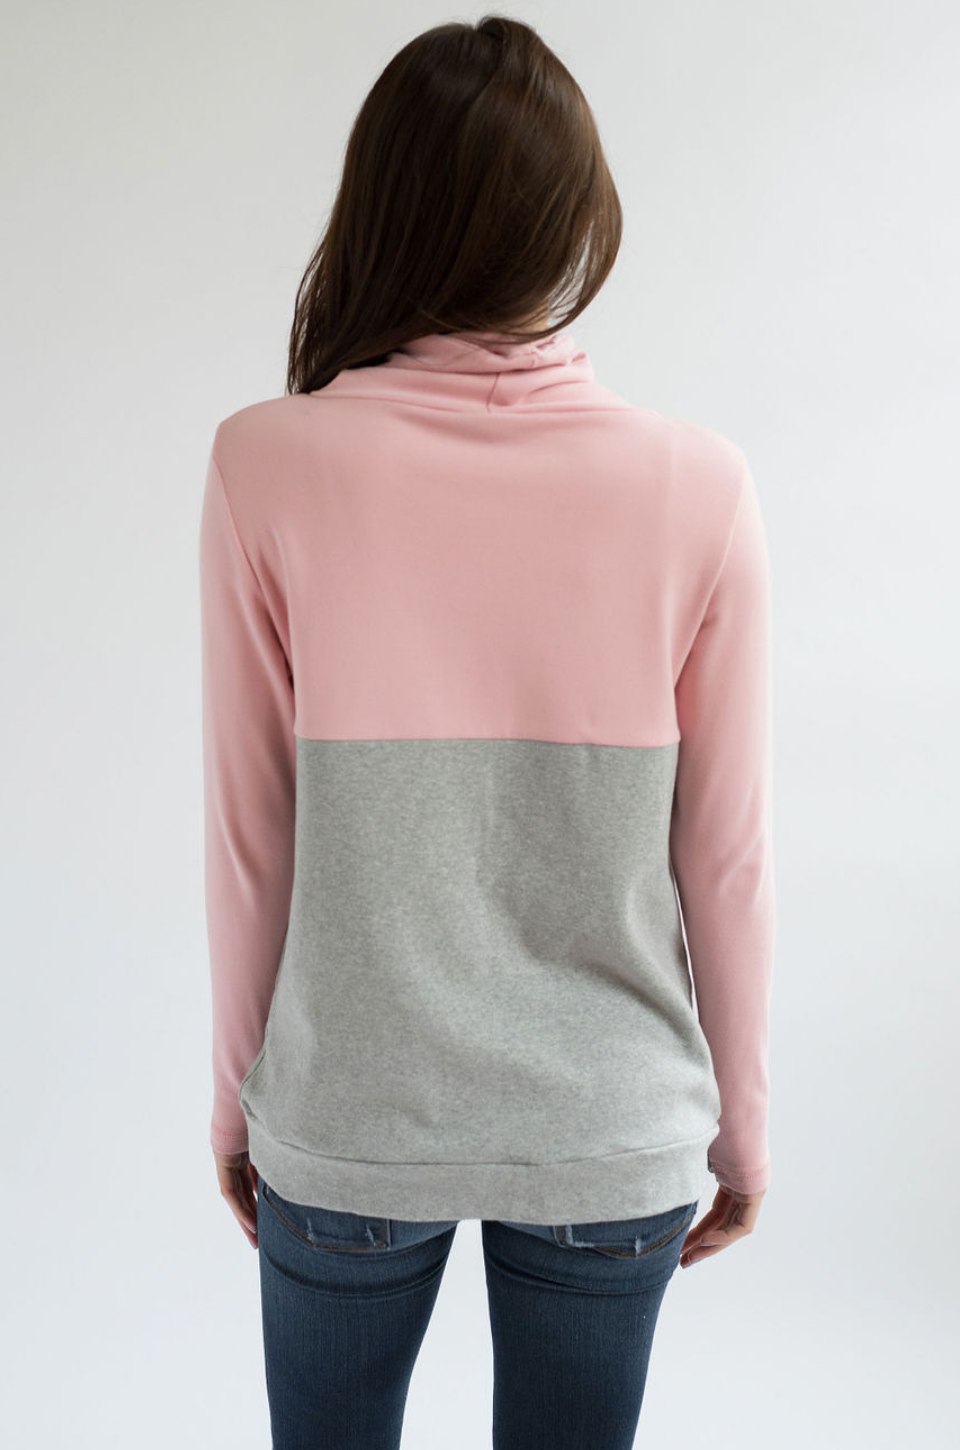 Nursing Sweatshirt for Breastfeeding - Hidden Zipper - Pink/Gray